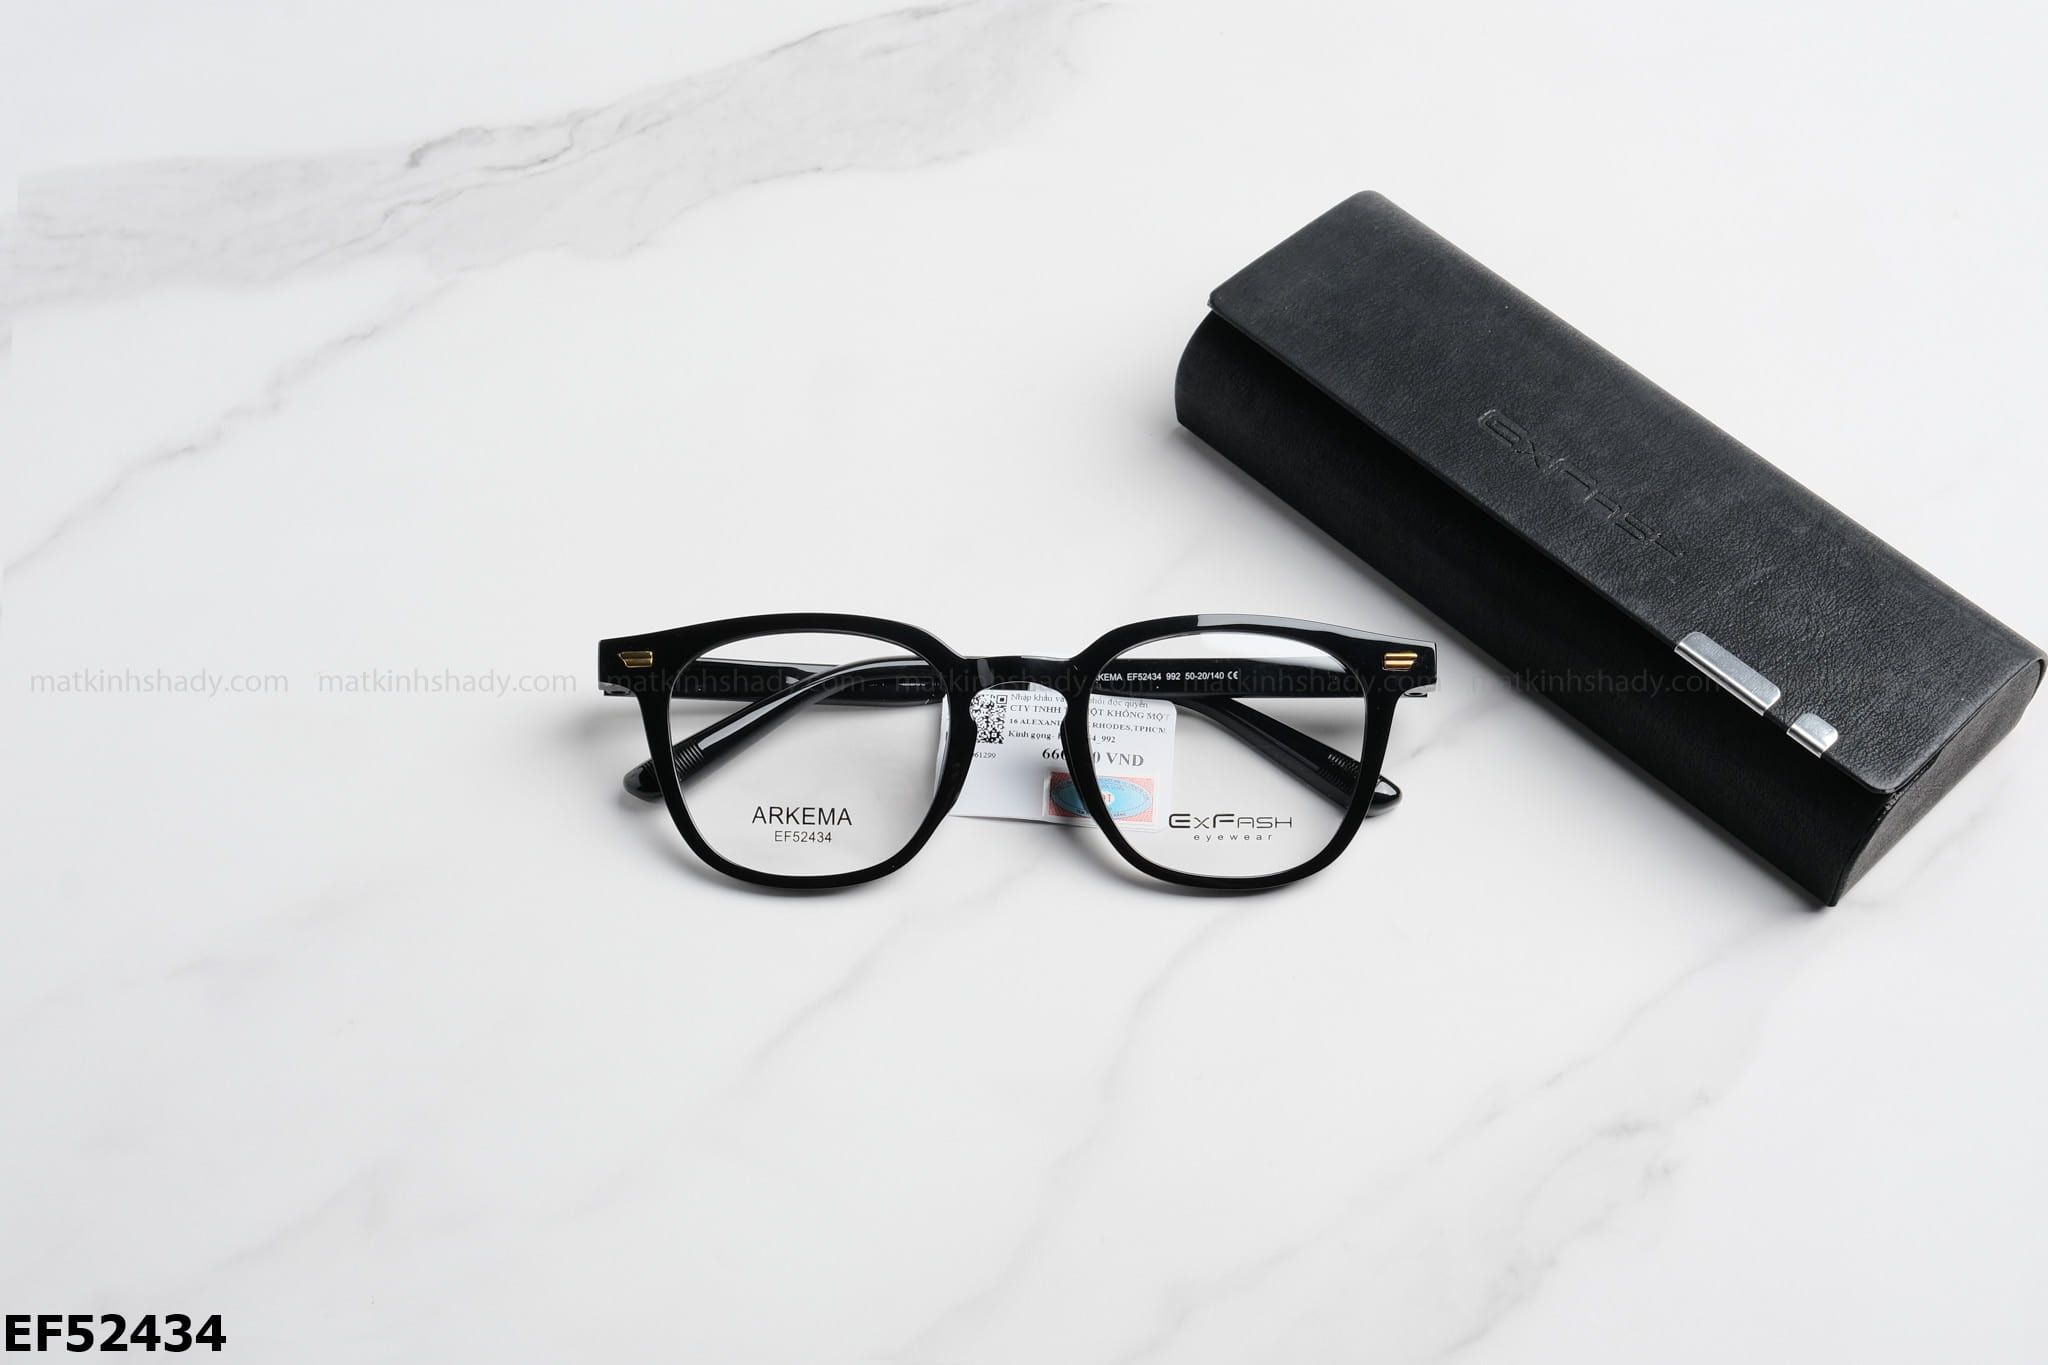  Exfash Eyewear - Glasses - EF52434 